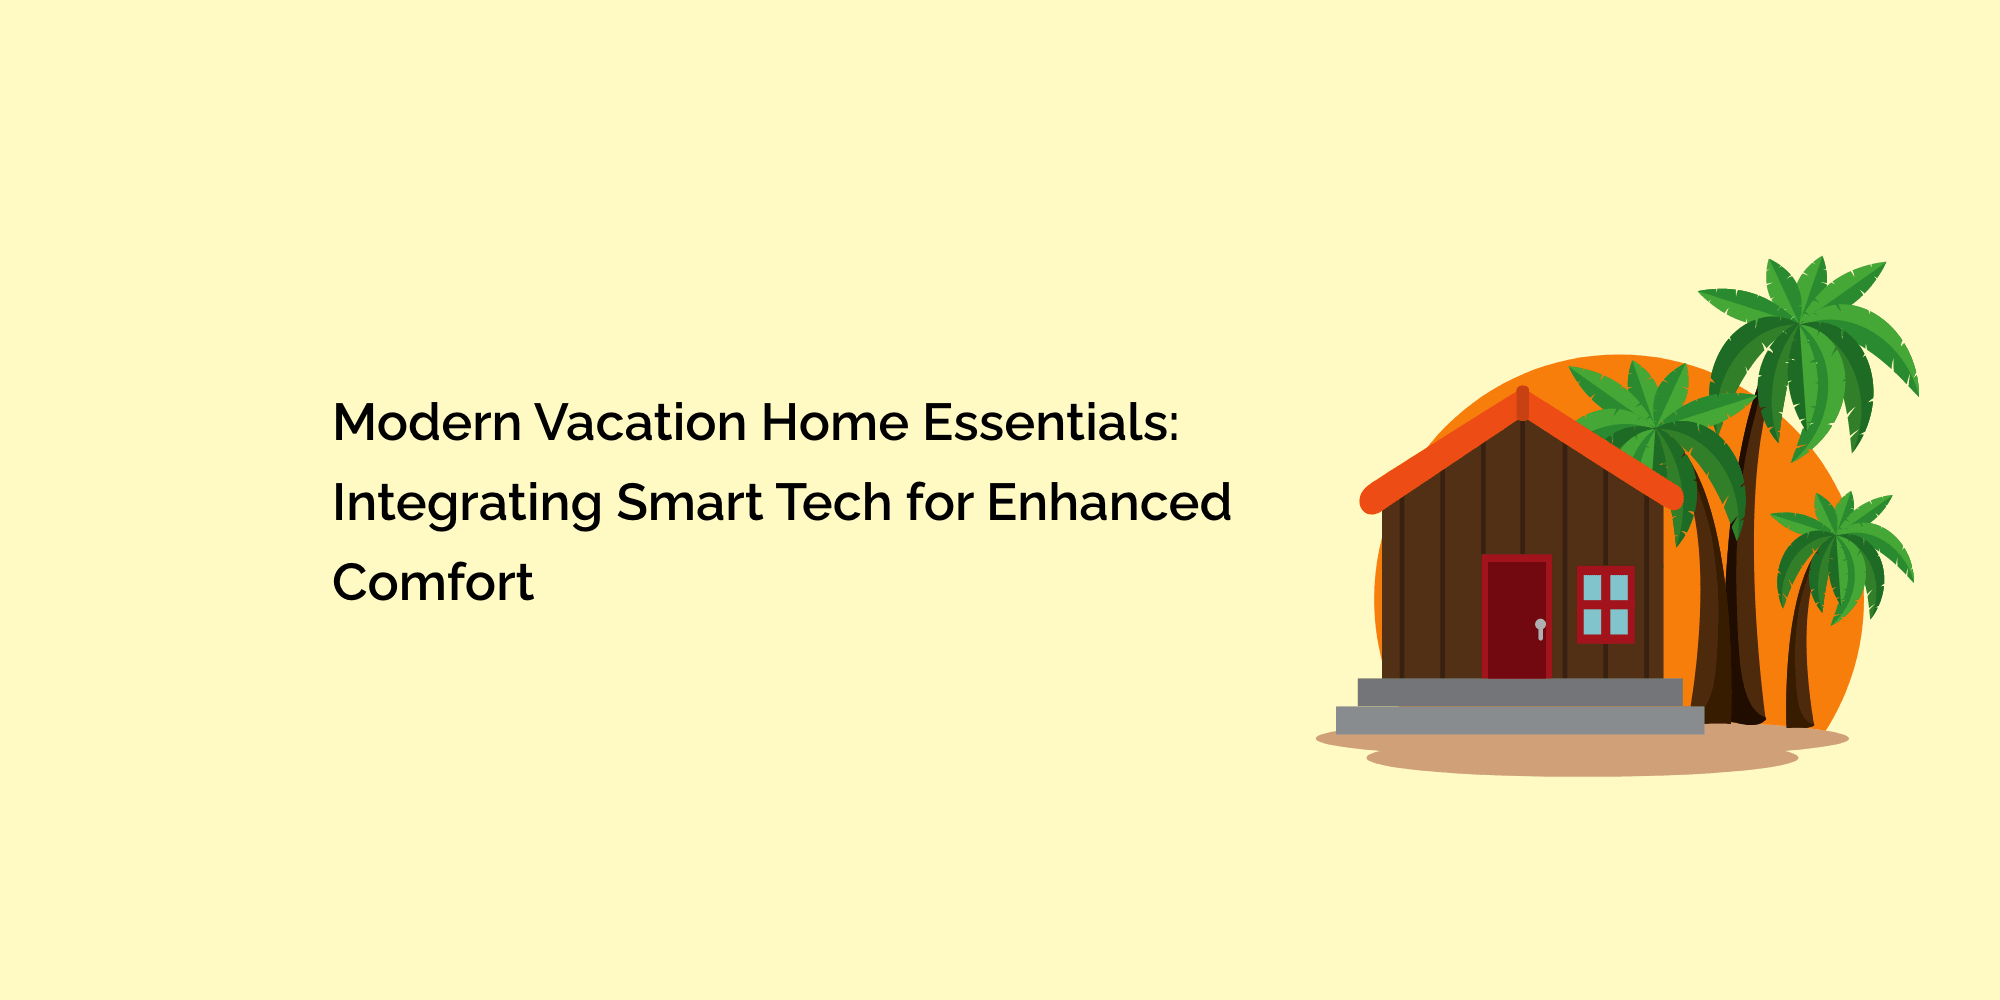 Modern Vacation Home Essentials: Integrating Smart Tech for Enhanced Comfort